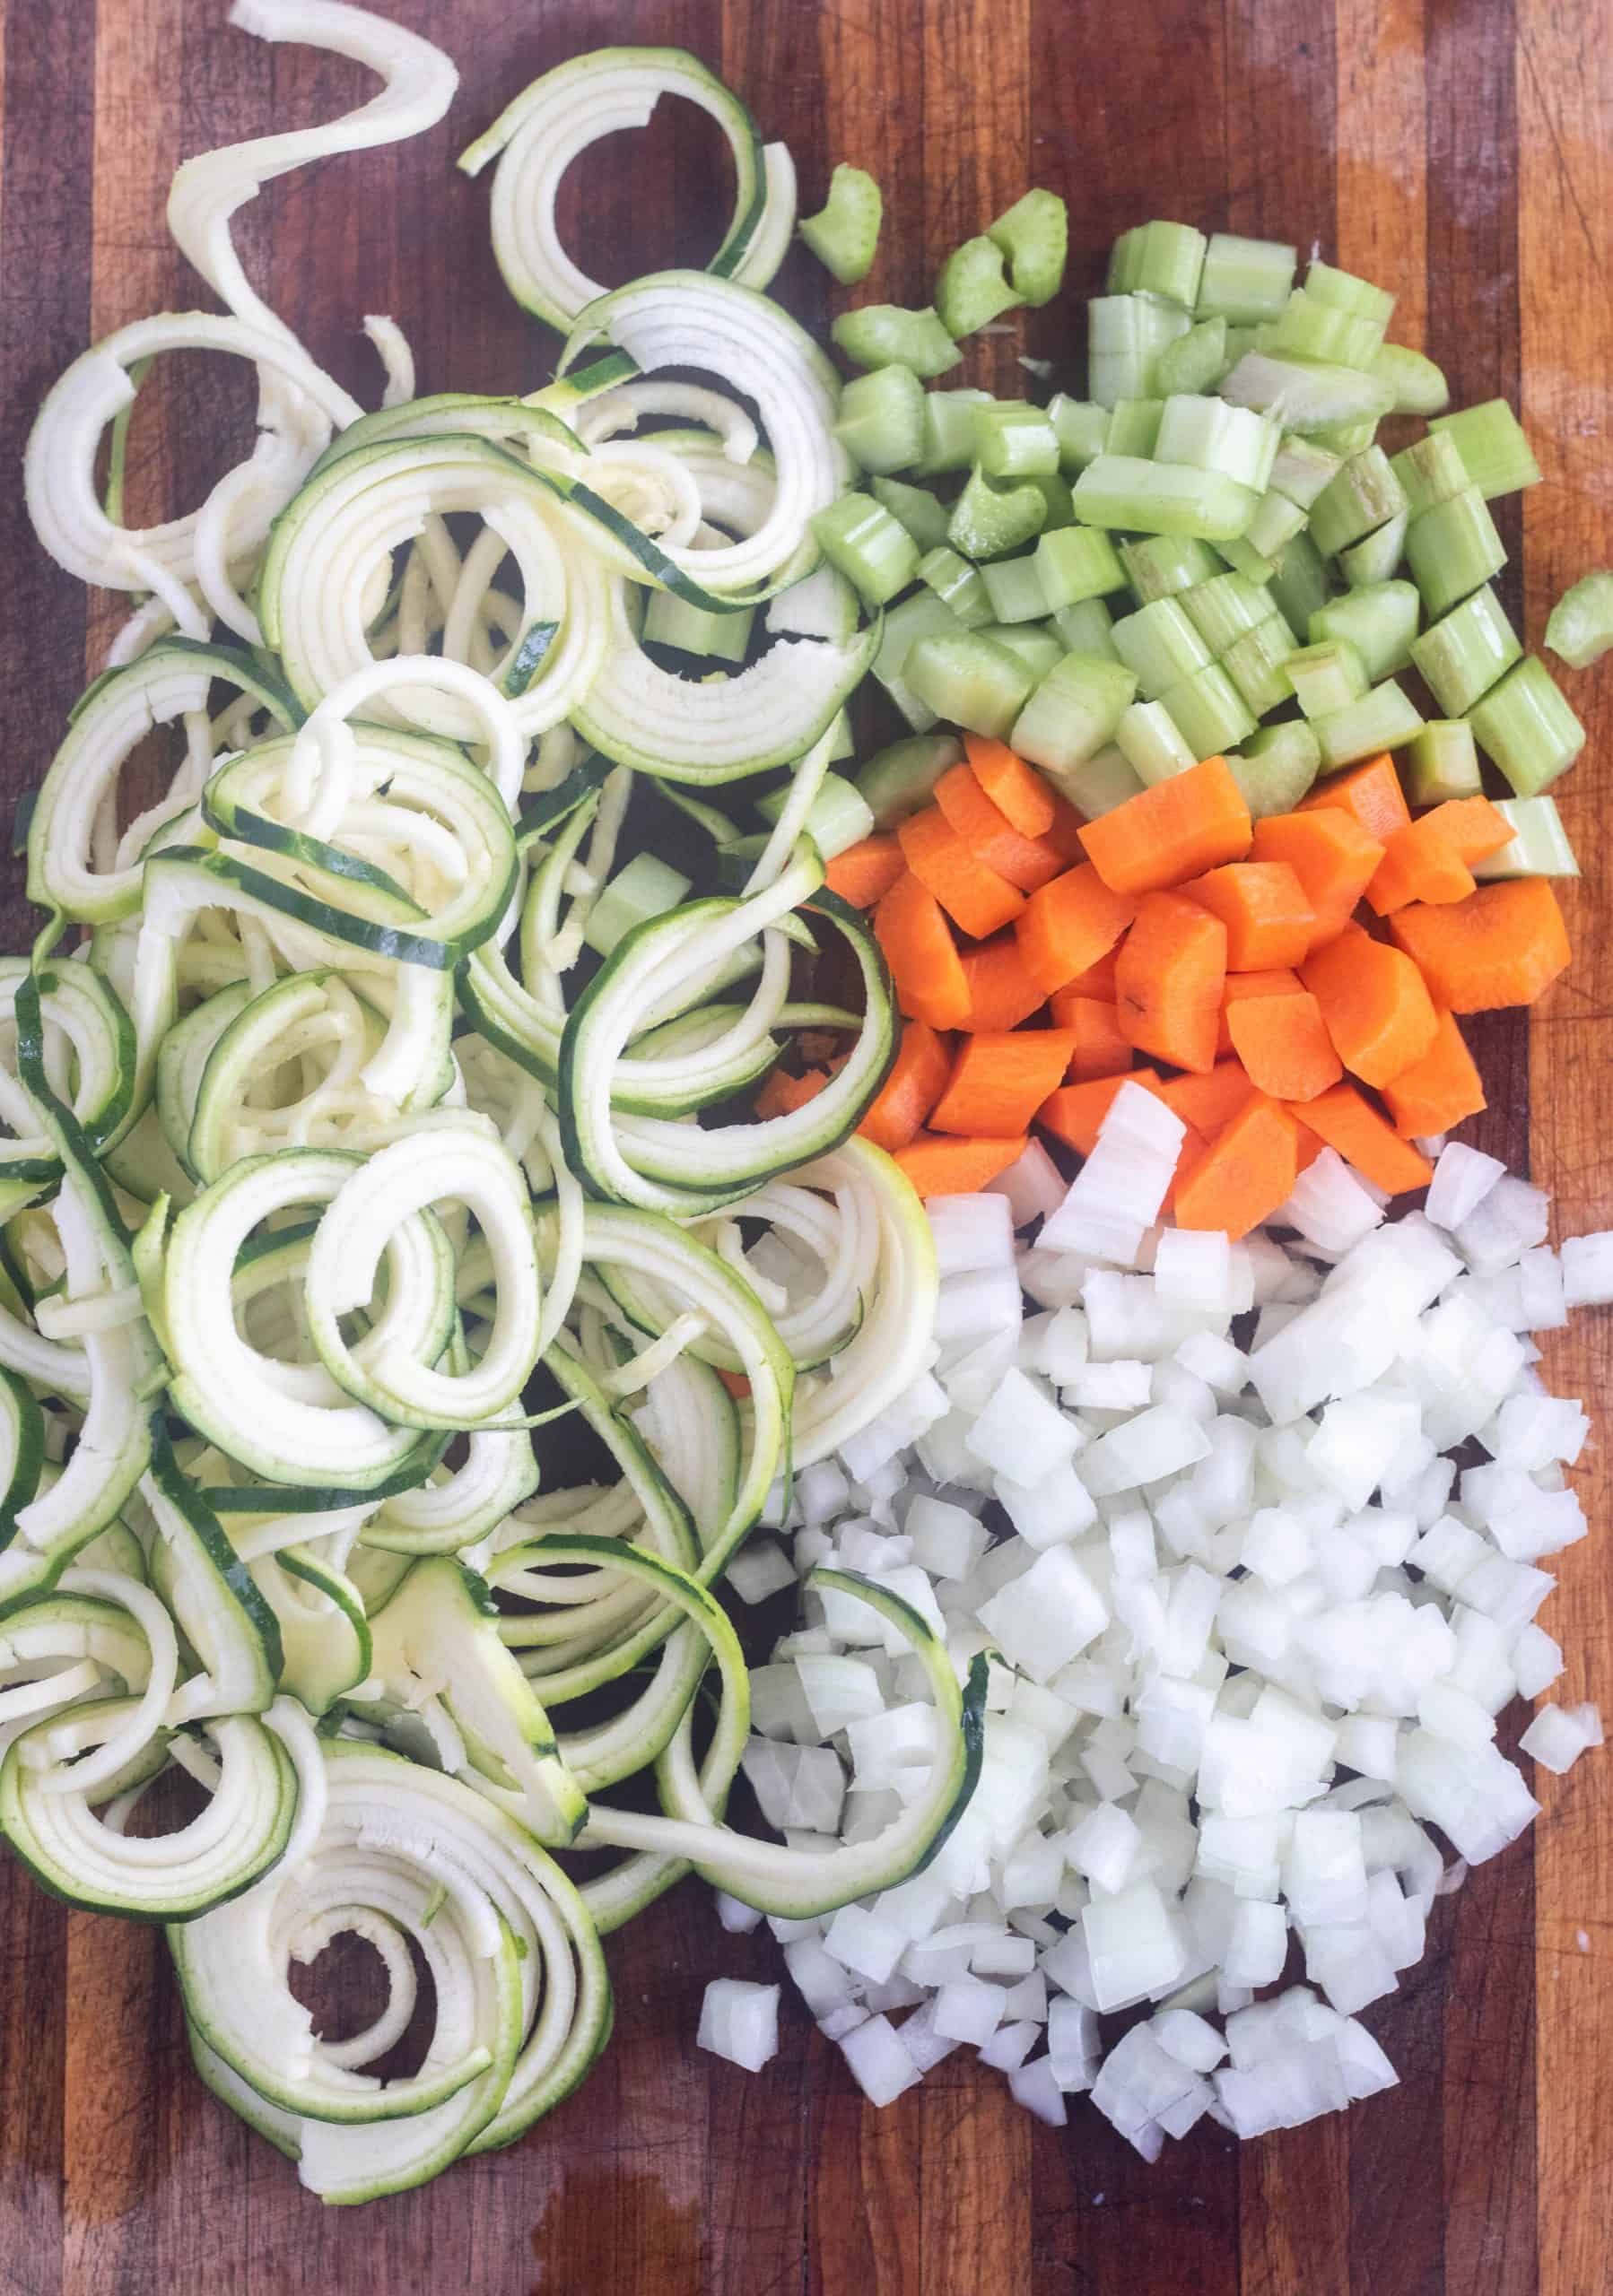 chopped veggies on a cutting board